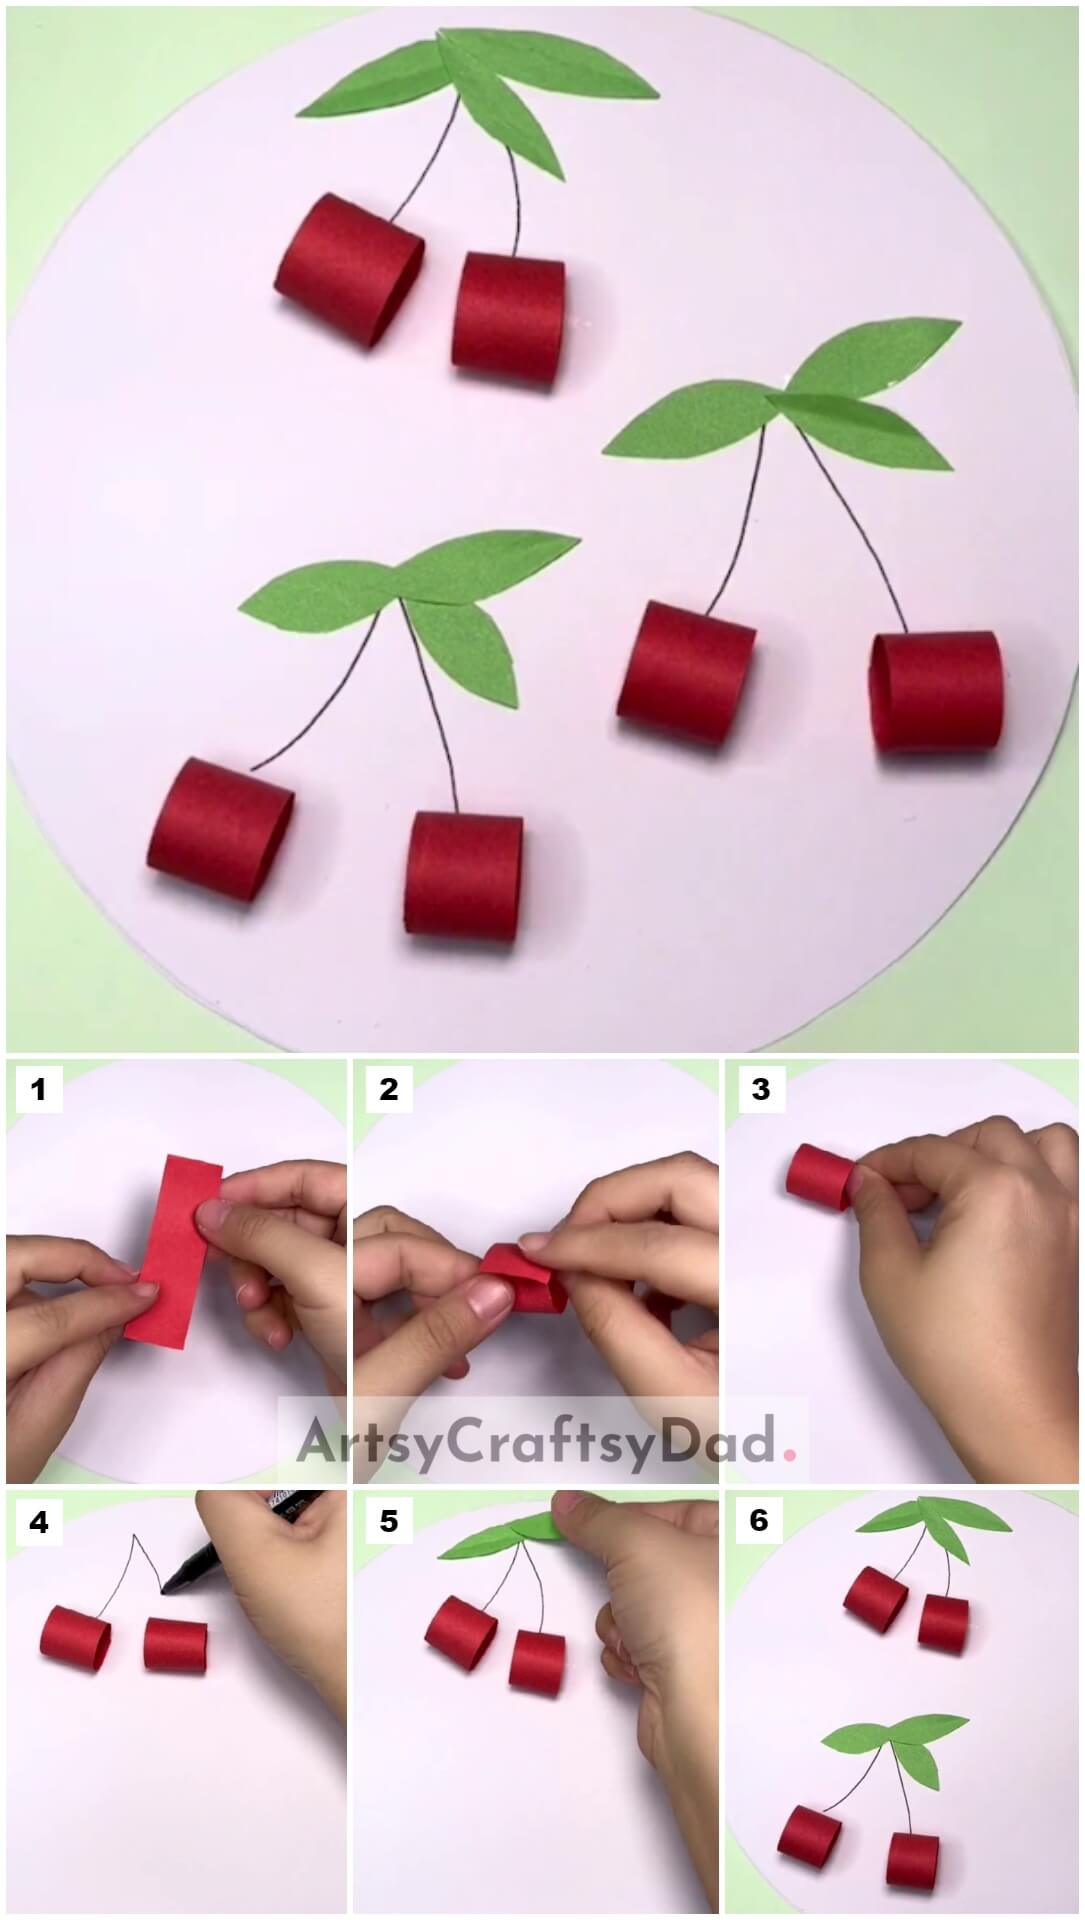 DIY 3D Paper Cherry Craft Tutorial for Beginners